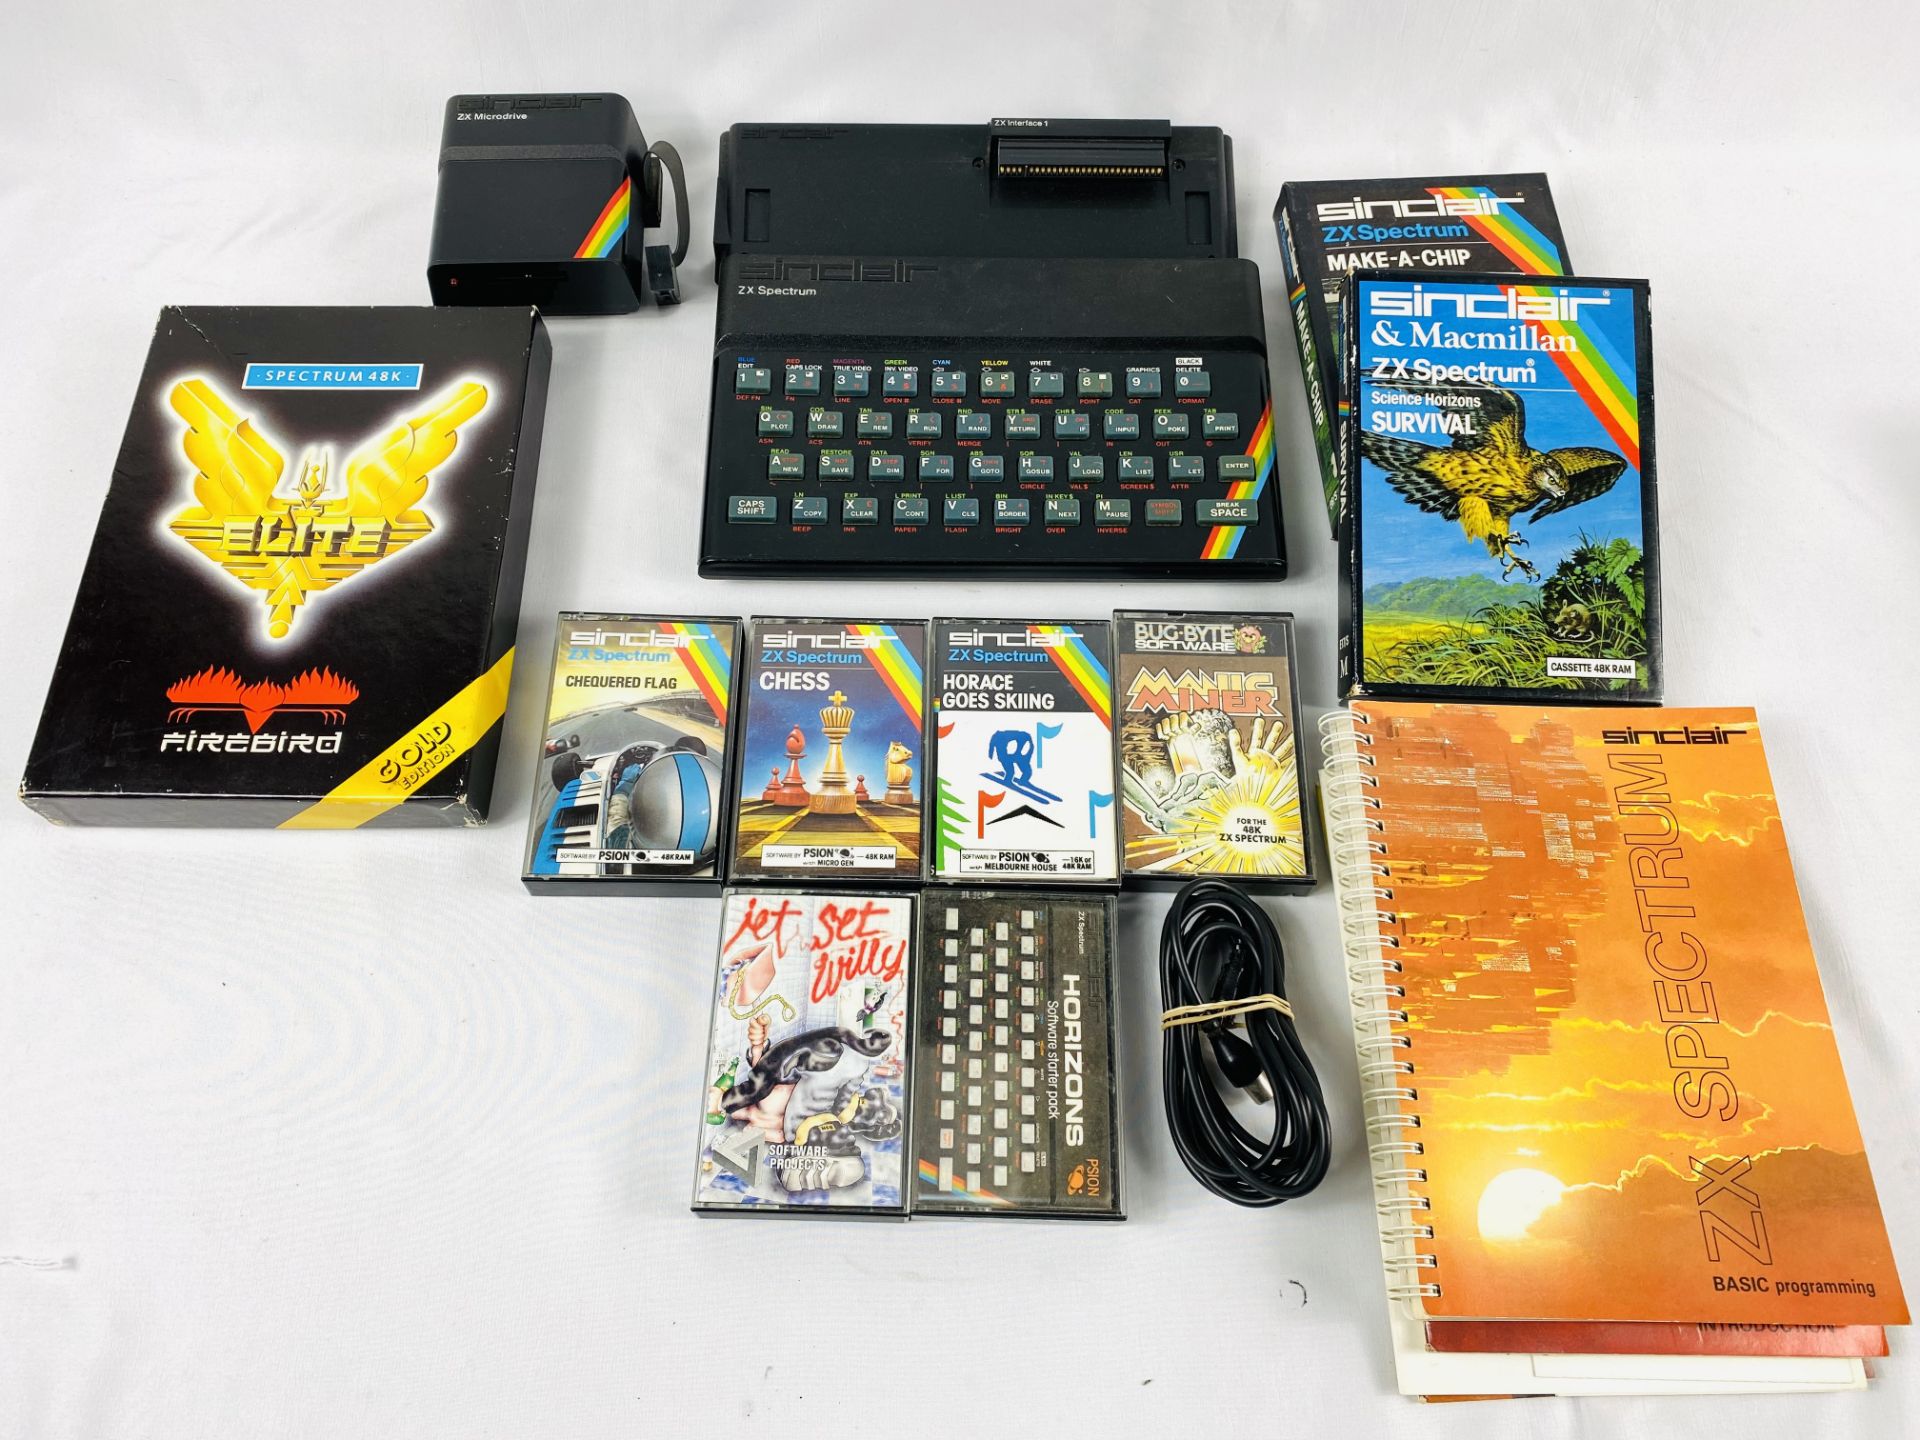 Sinclair ZX Spectrum personal computer